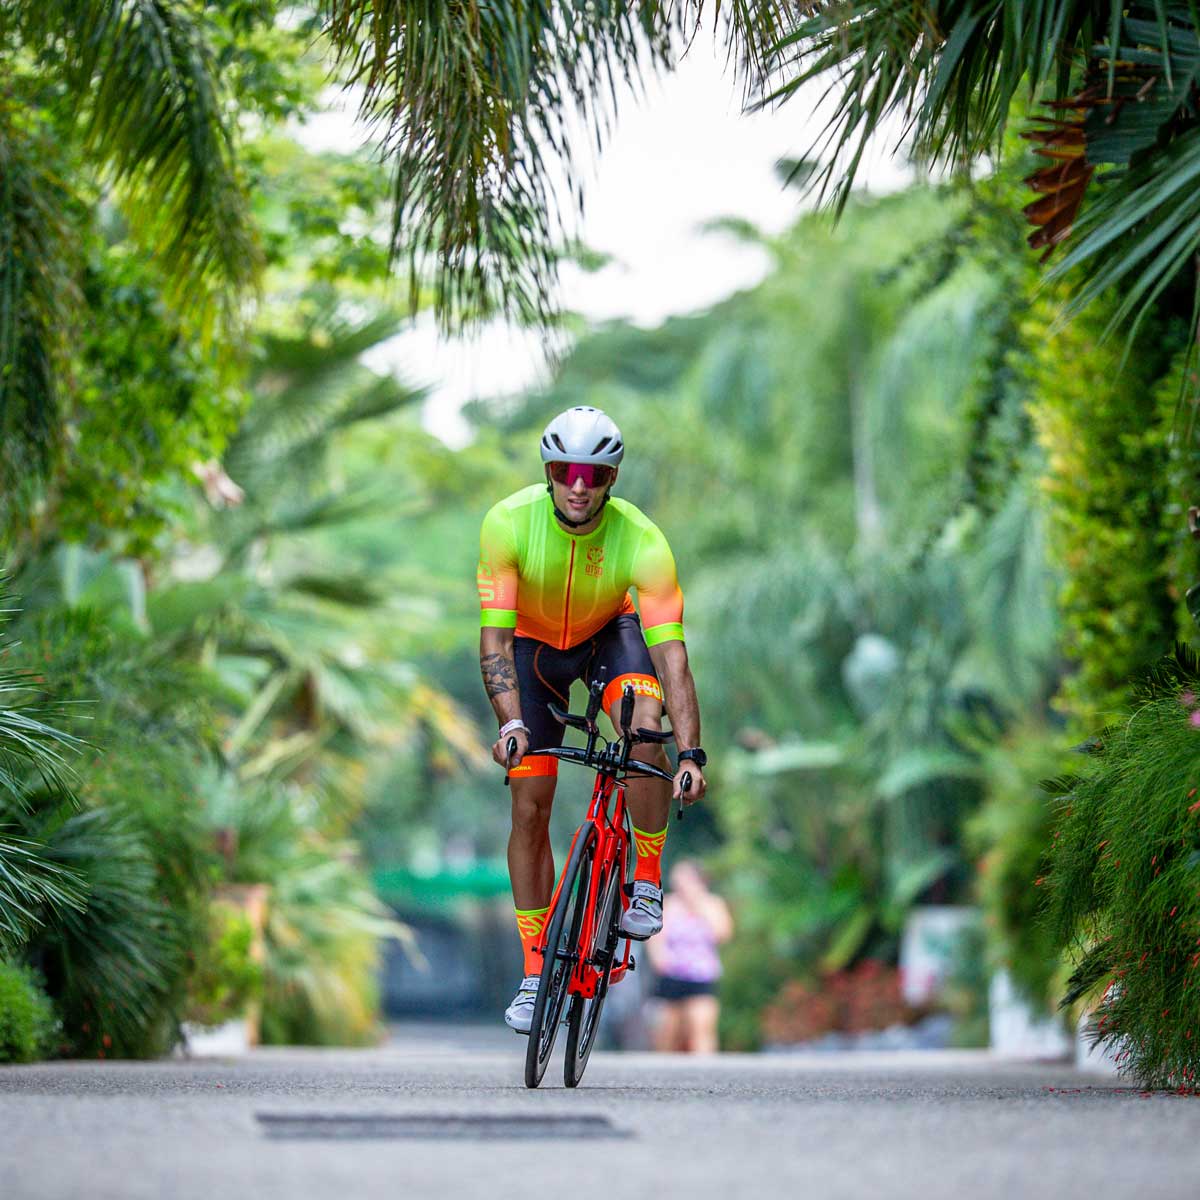 Men's Cycling Shorts Fluo Orange (Outlet)